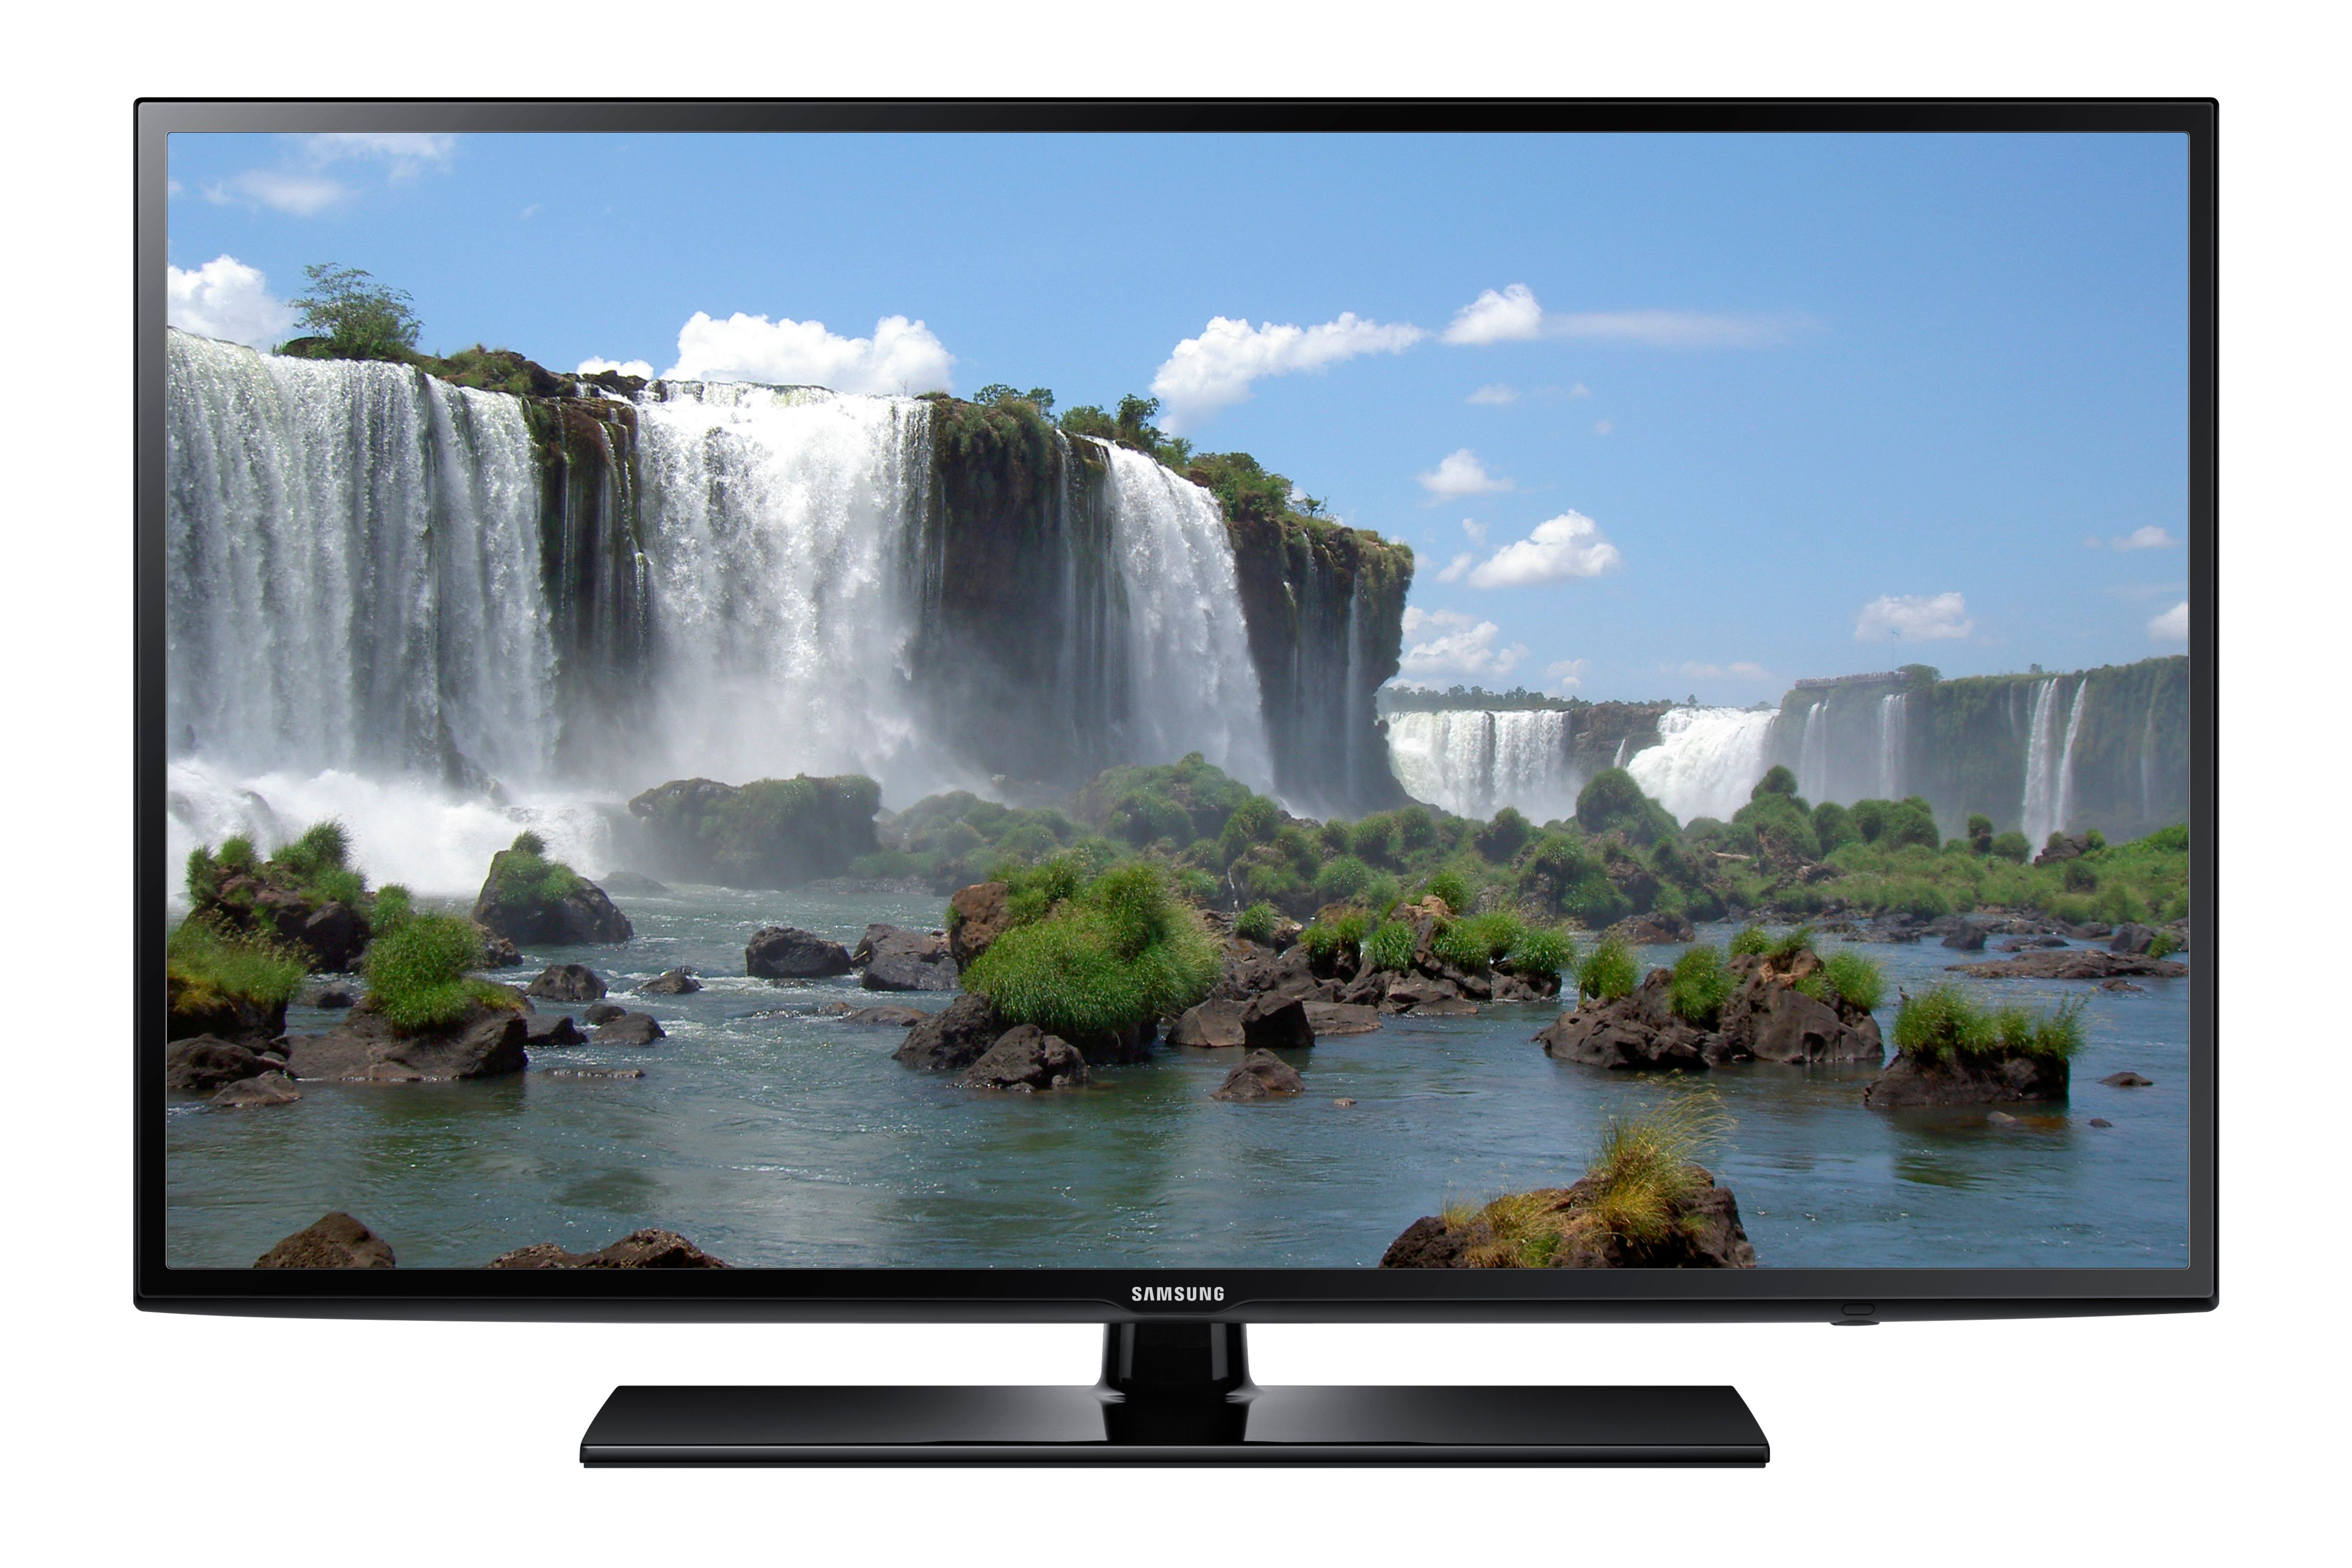 Samsung UN55J6201 55" 1080p 60Hz Class LED Smart HDTV - image 1 of 5